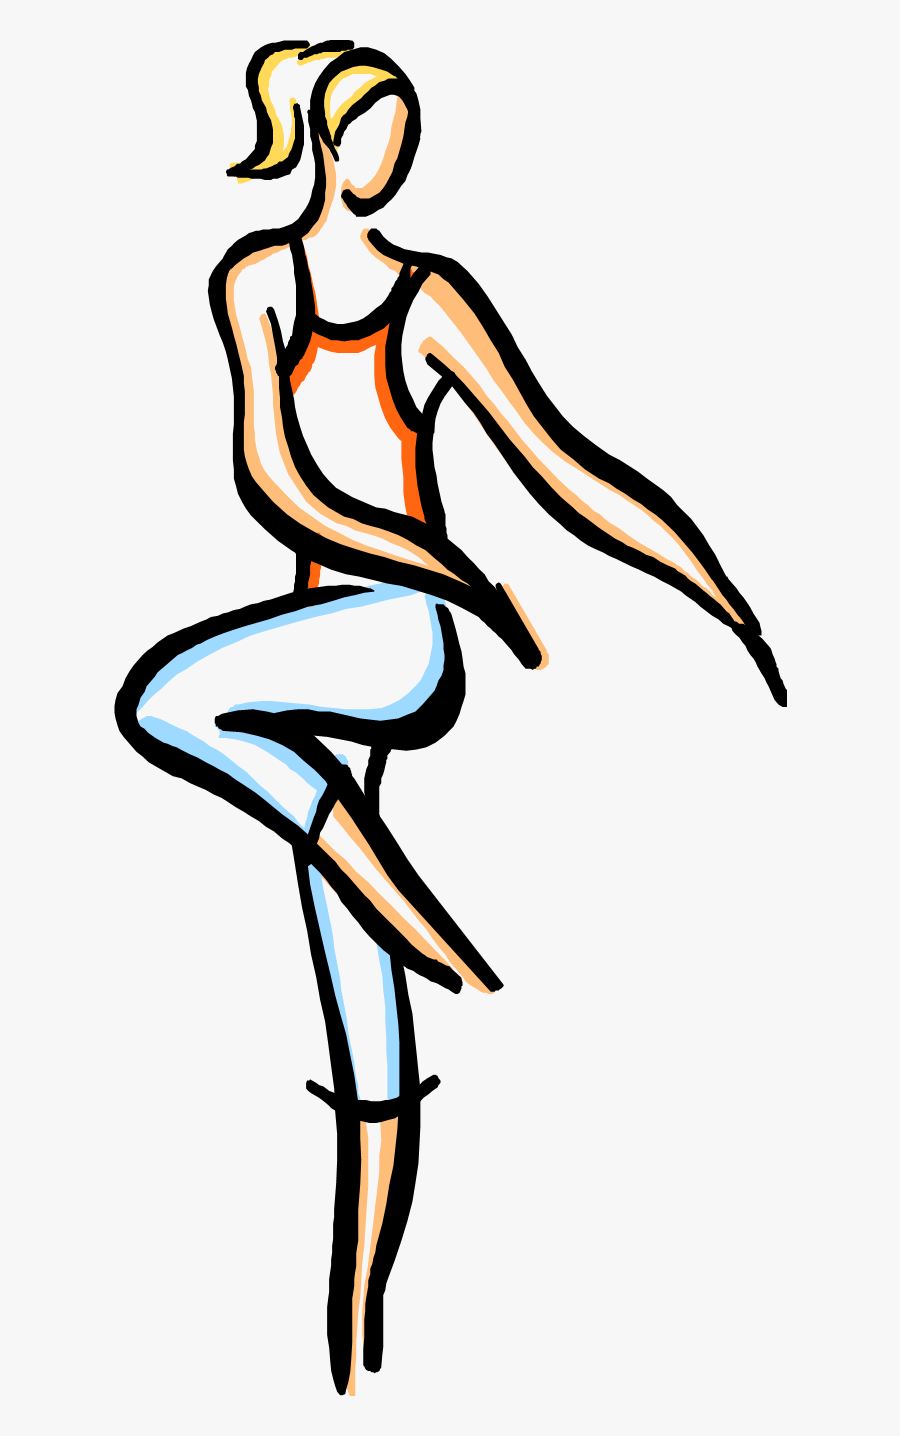 Animated Happy Dance Clip Art - Dancing Image Clip Art Transparent, Transparent Clipart